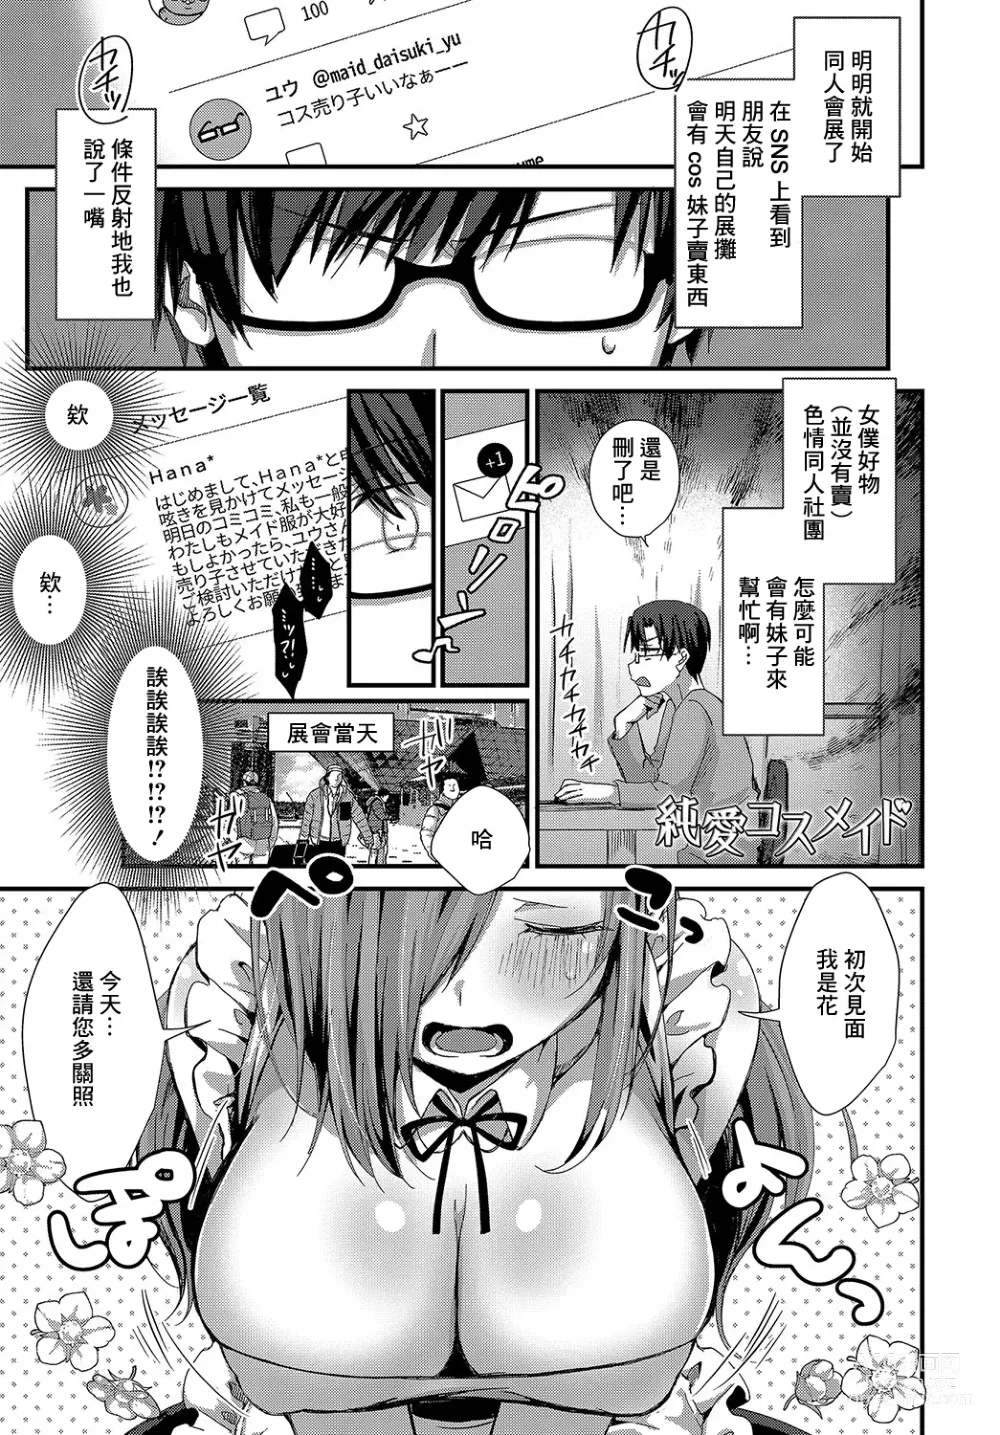 Page 1 of manga Junai Cos Maid